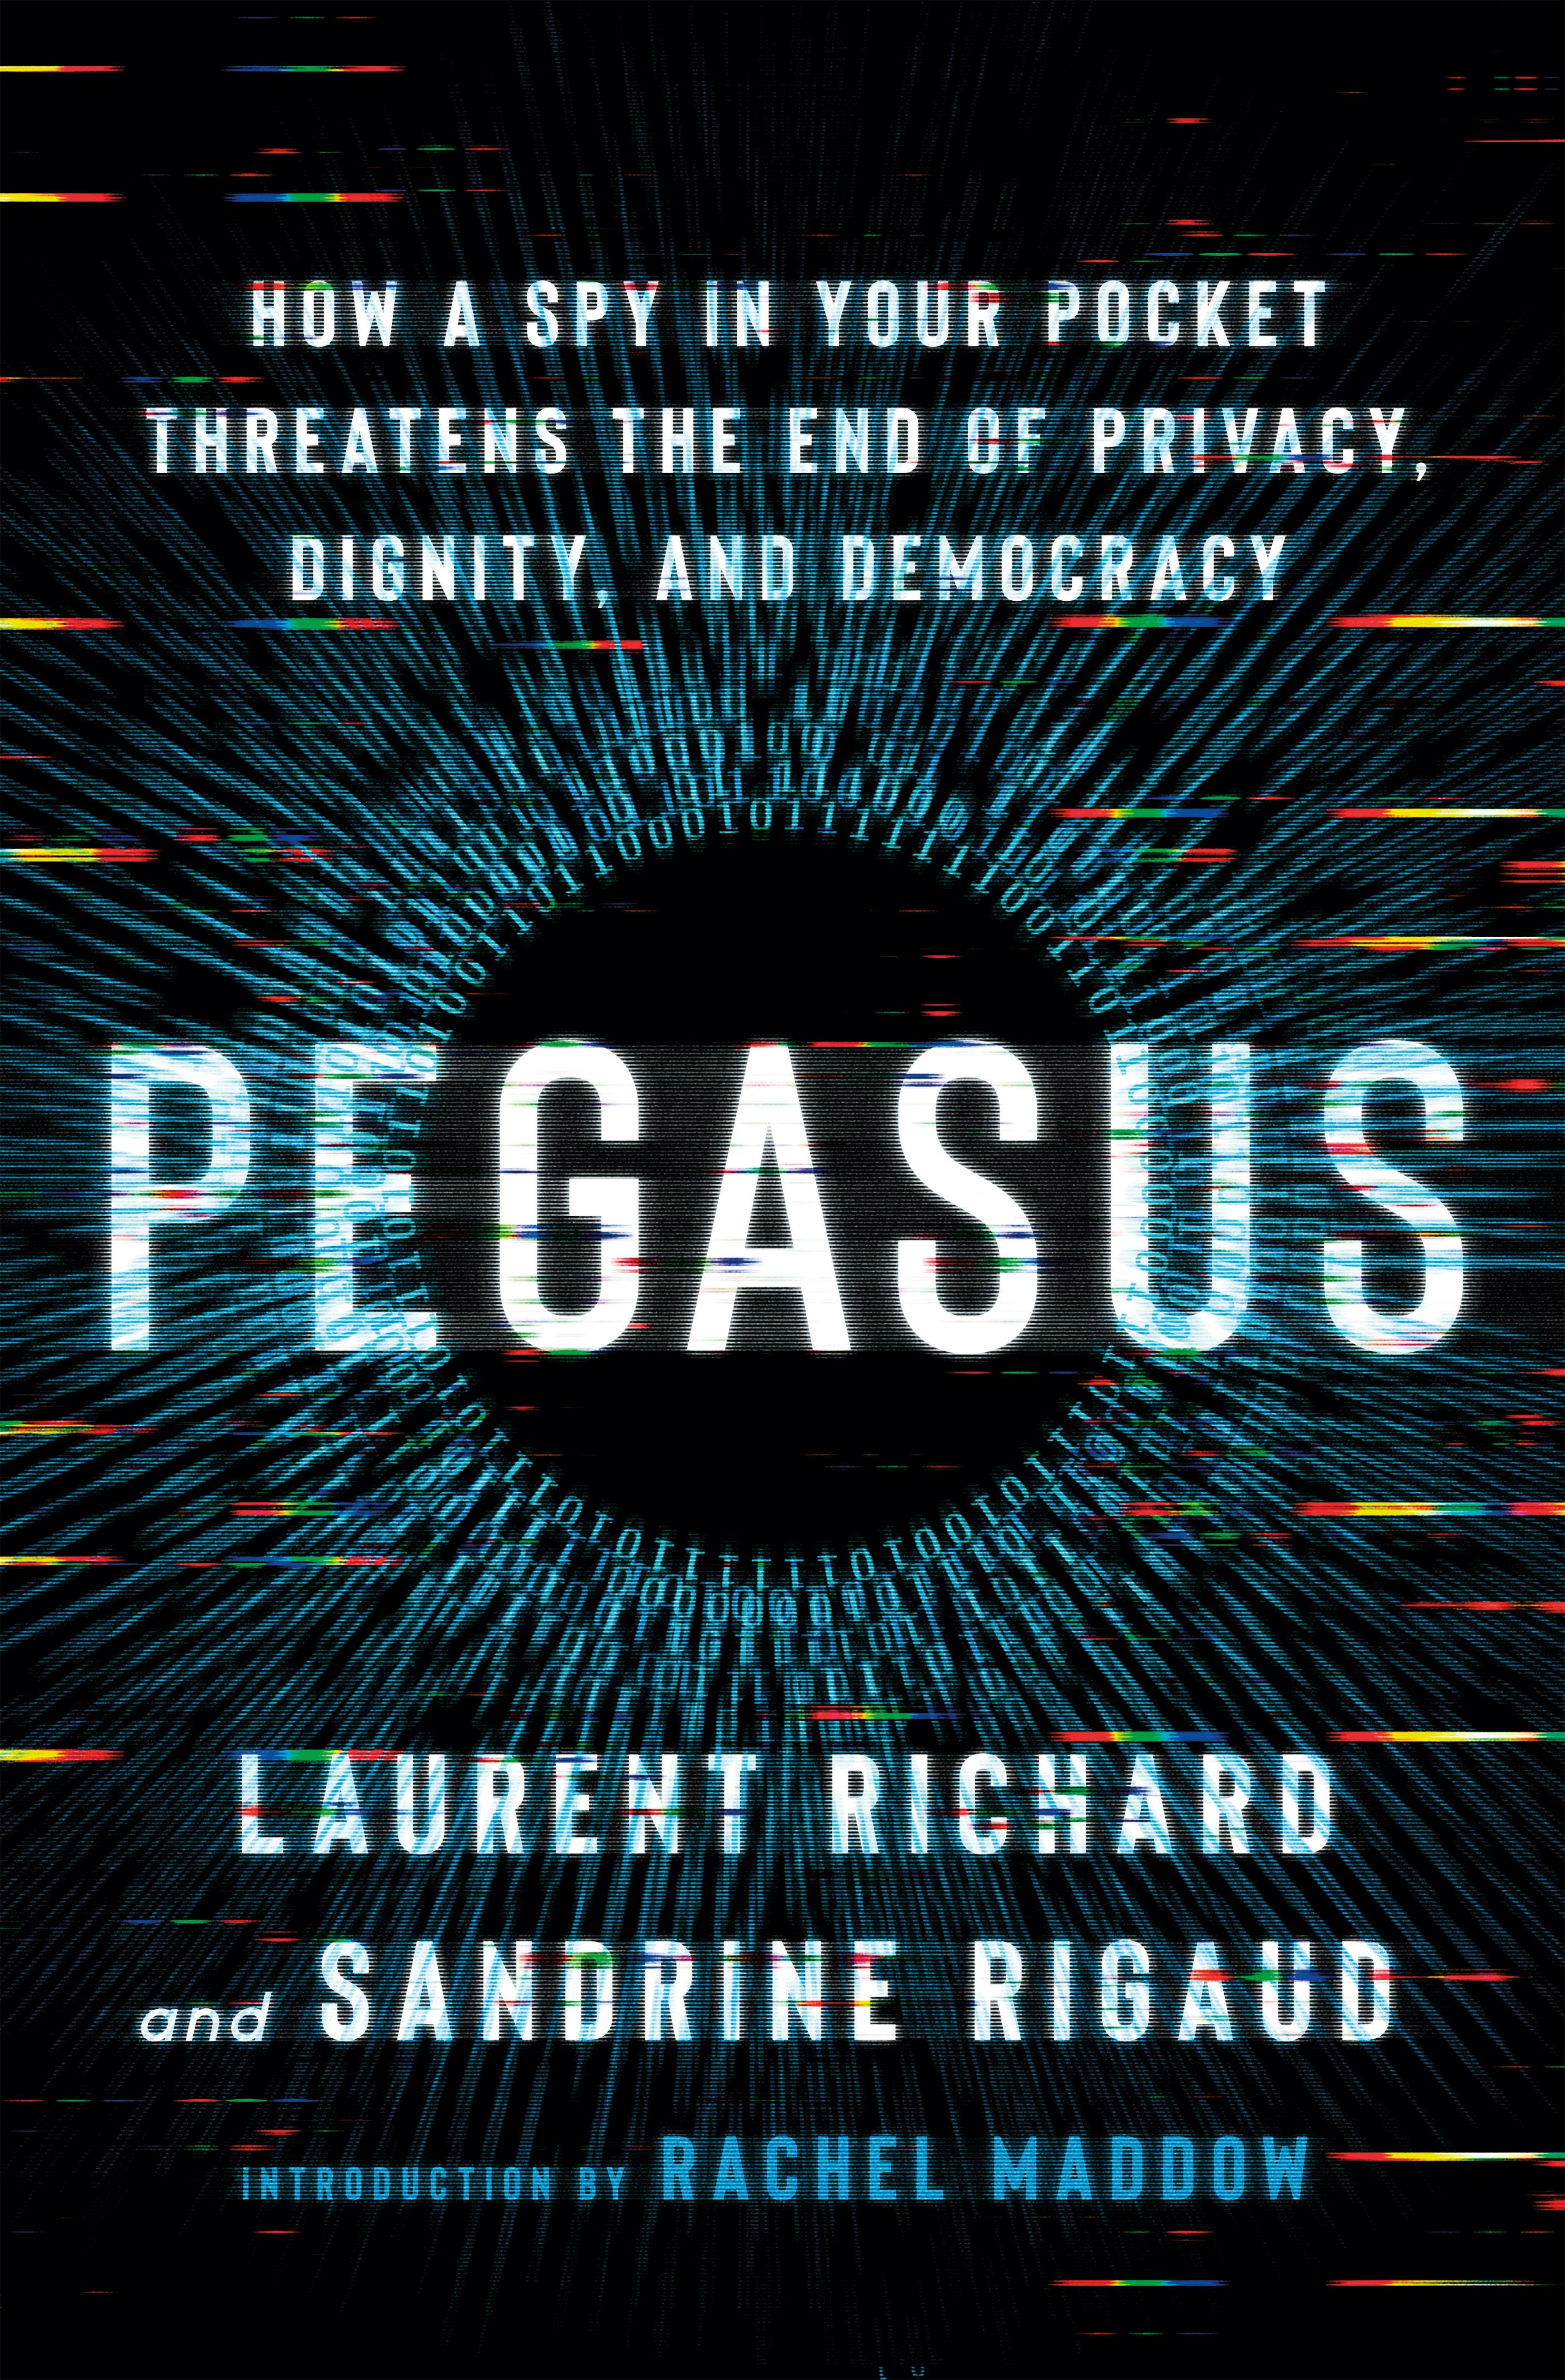 Pegasus by Laurent Richard and Sandrine Rigaud